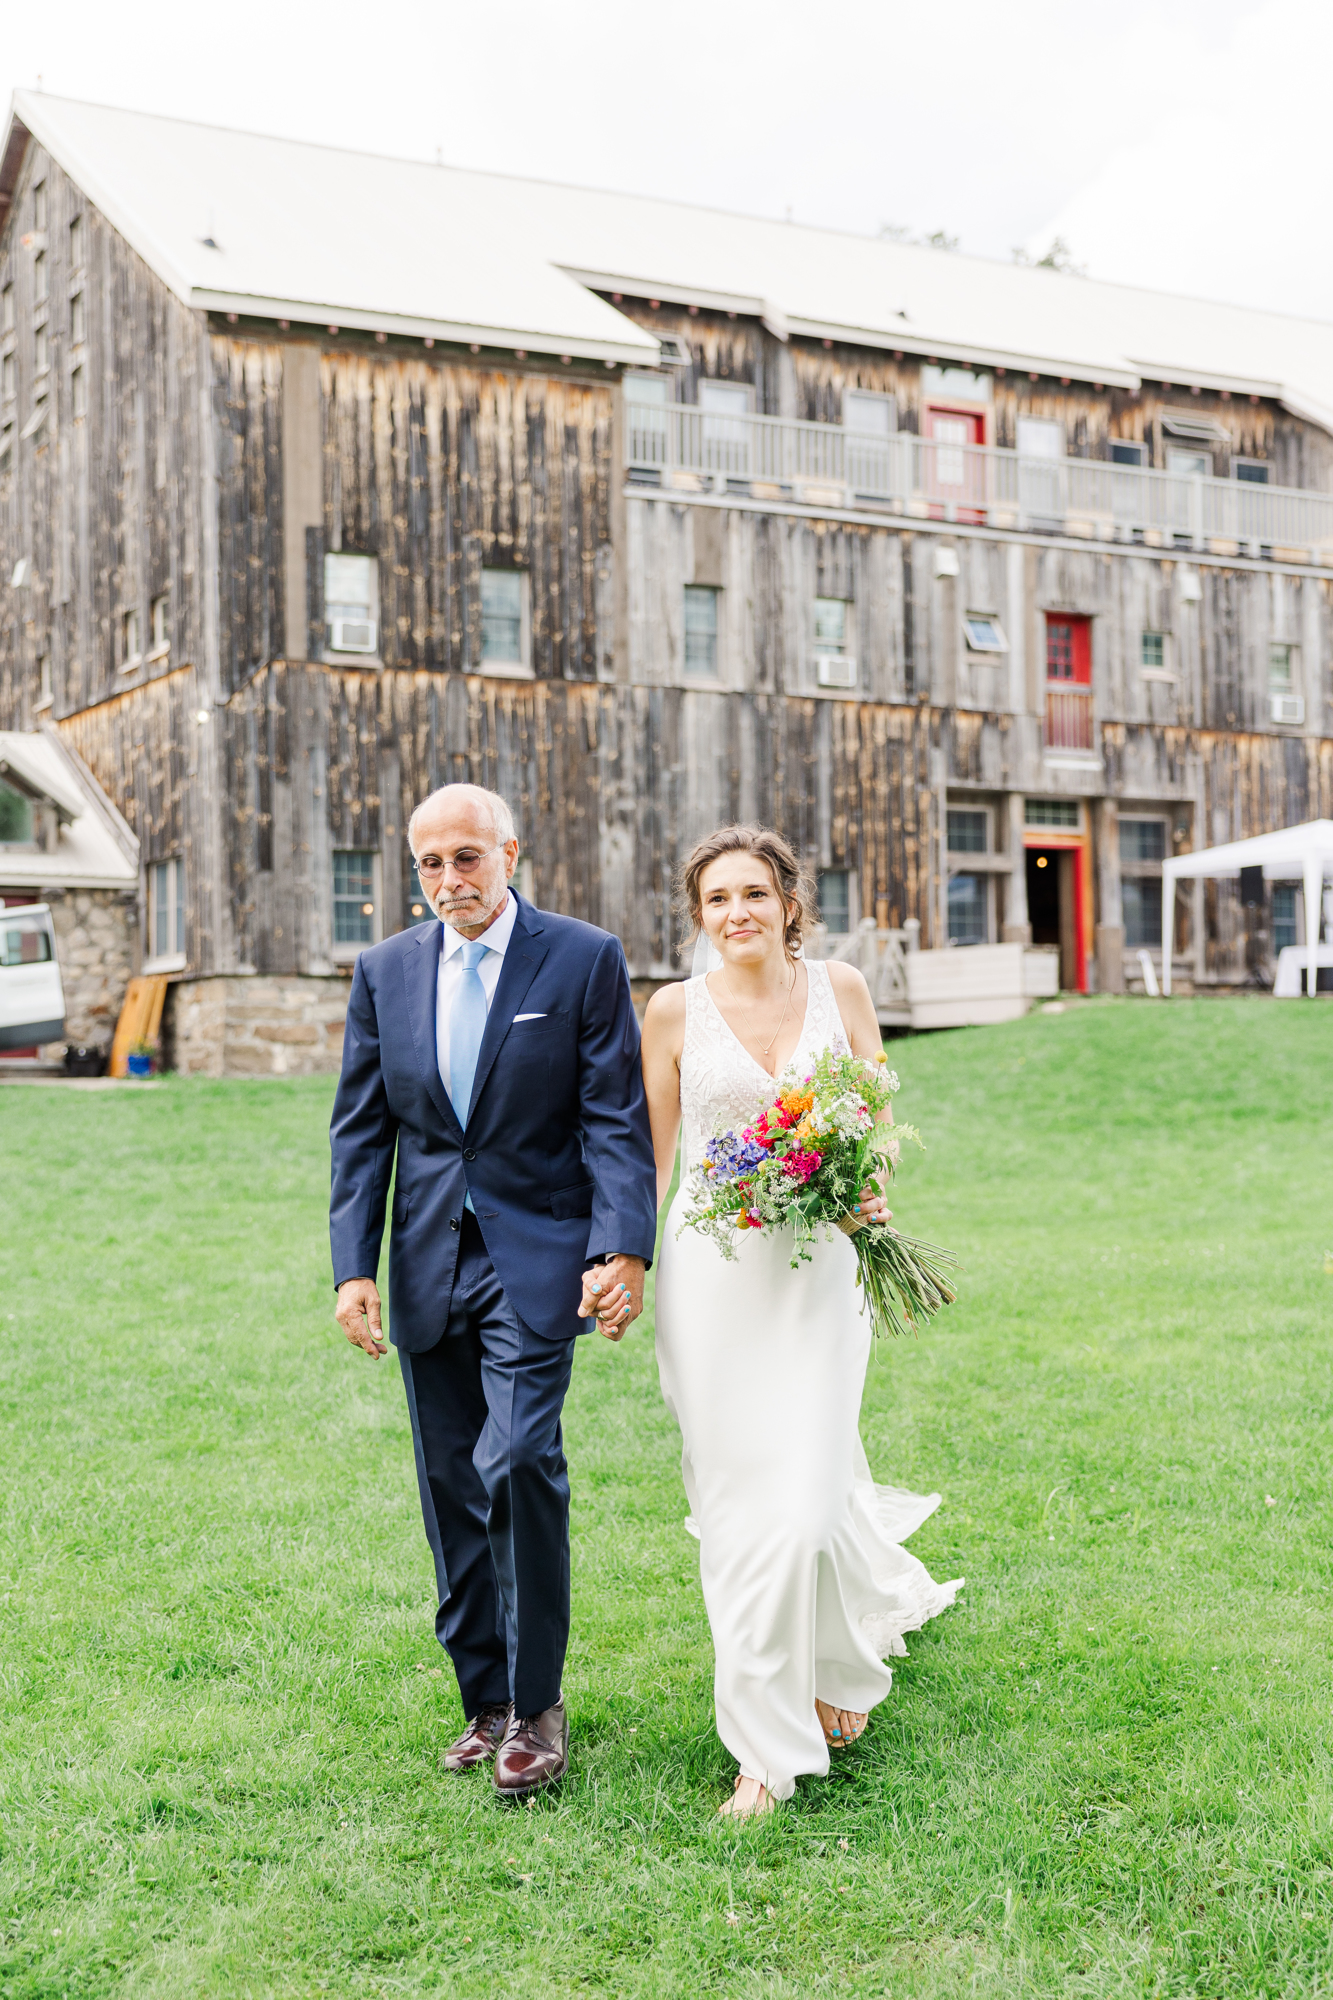 Breathtaking Upstate Wedding Photos at Cristman Barn in Ilion, New York